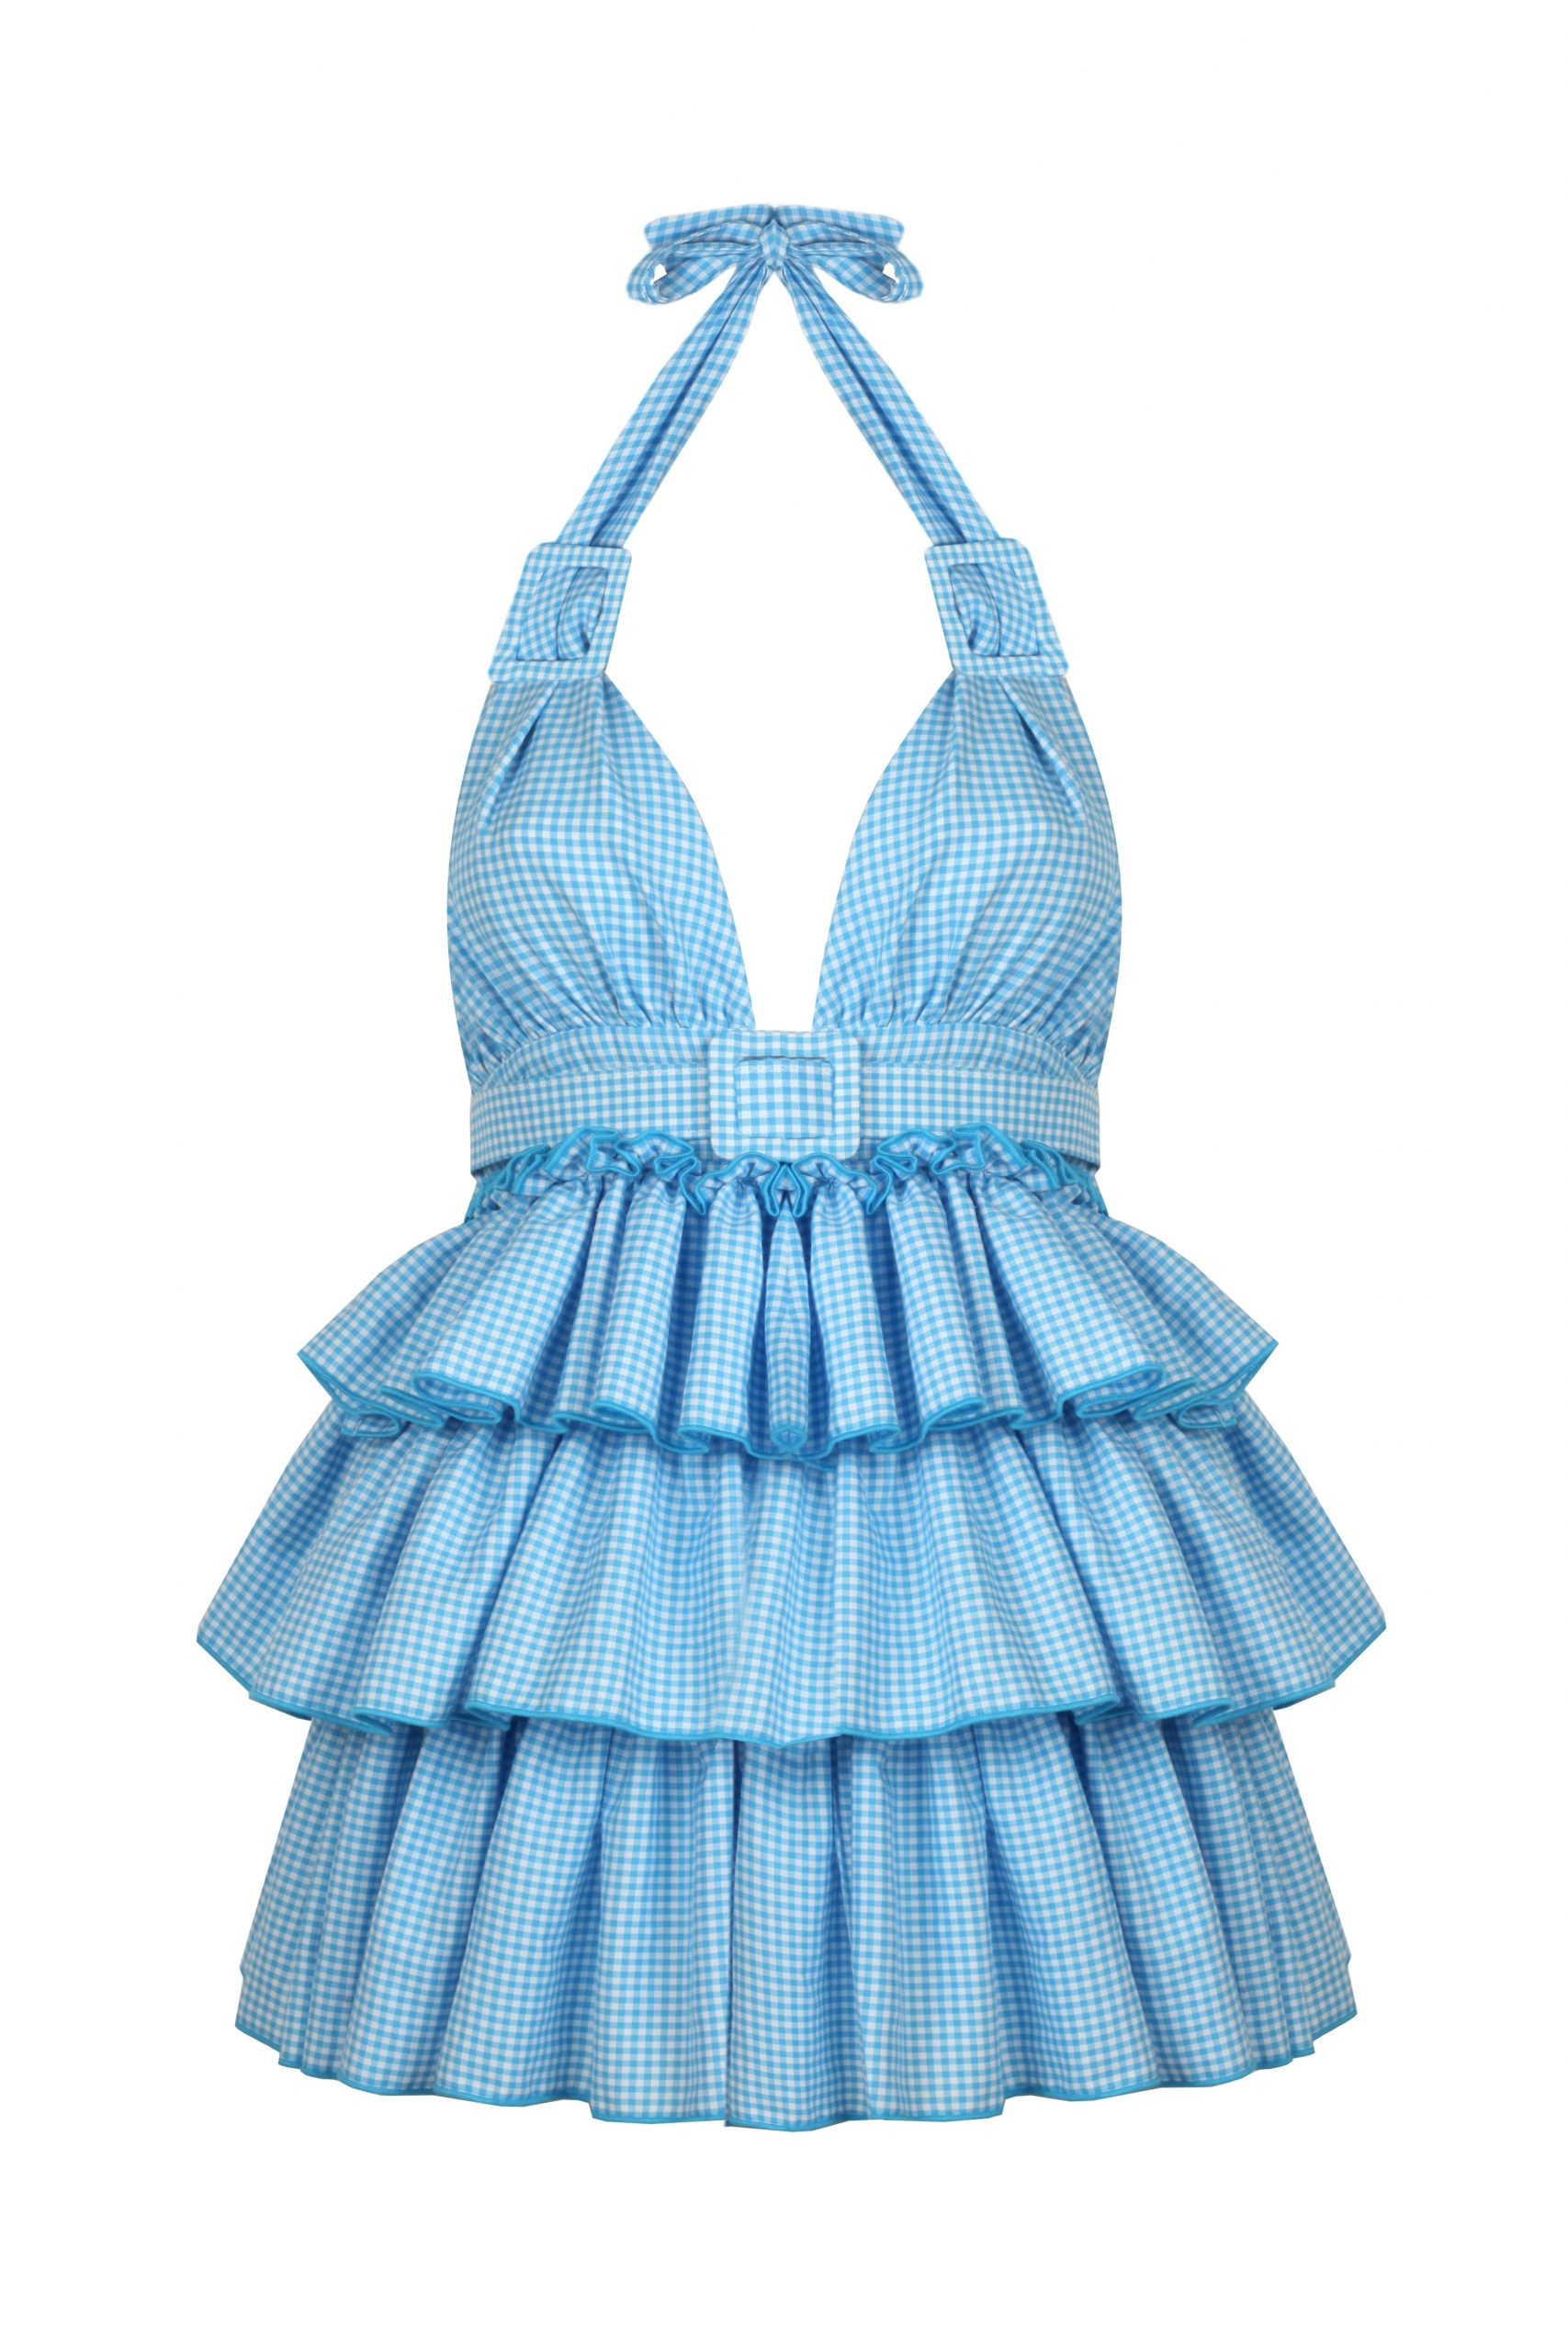 Bellano Blue Dress